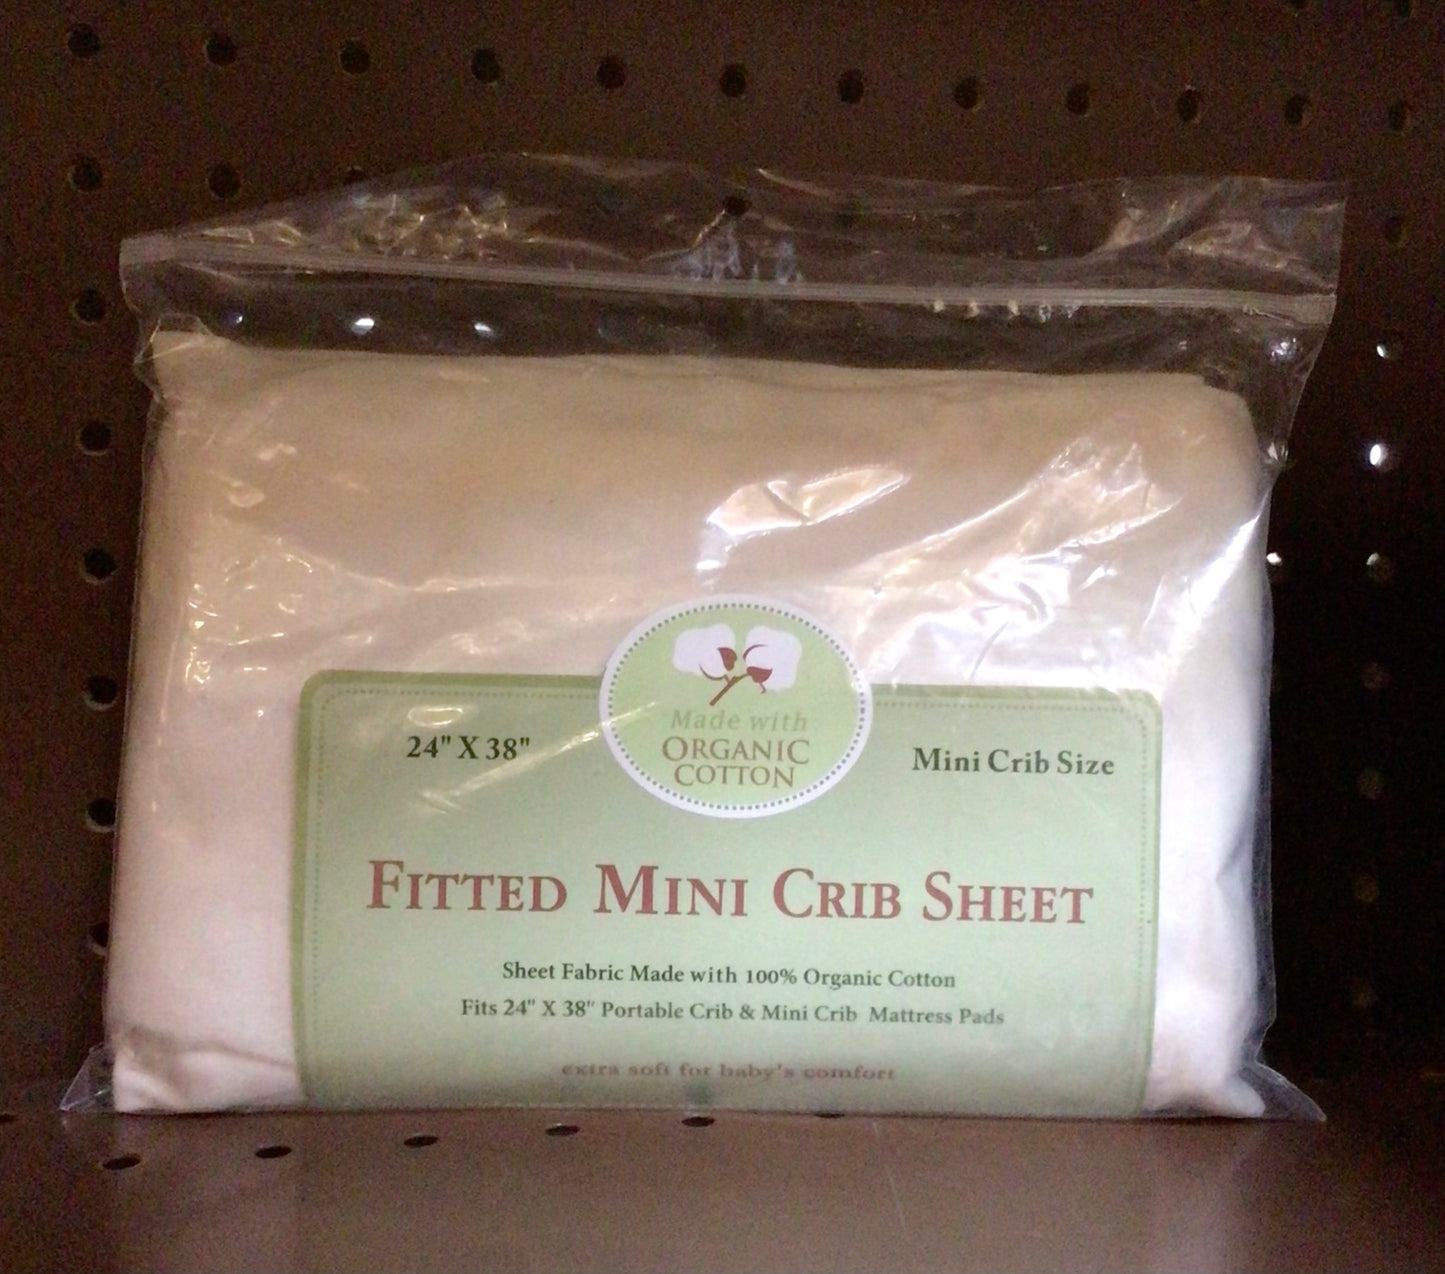 Organic cotton knit fitted portable/mini crib sheet